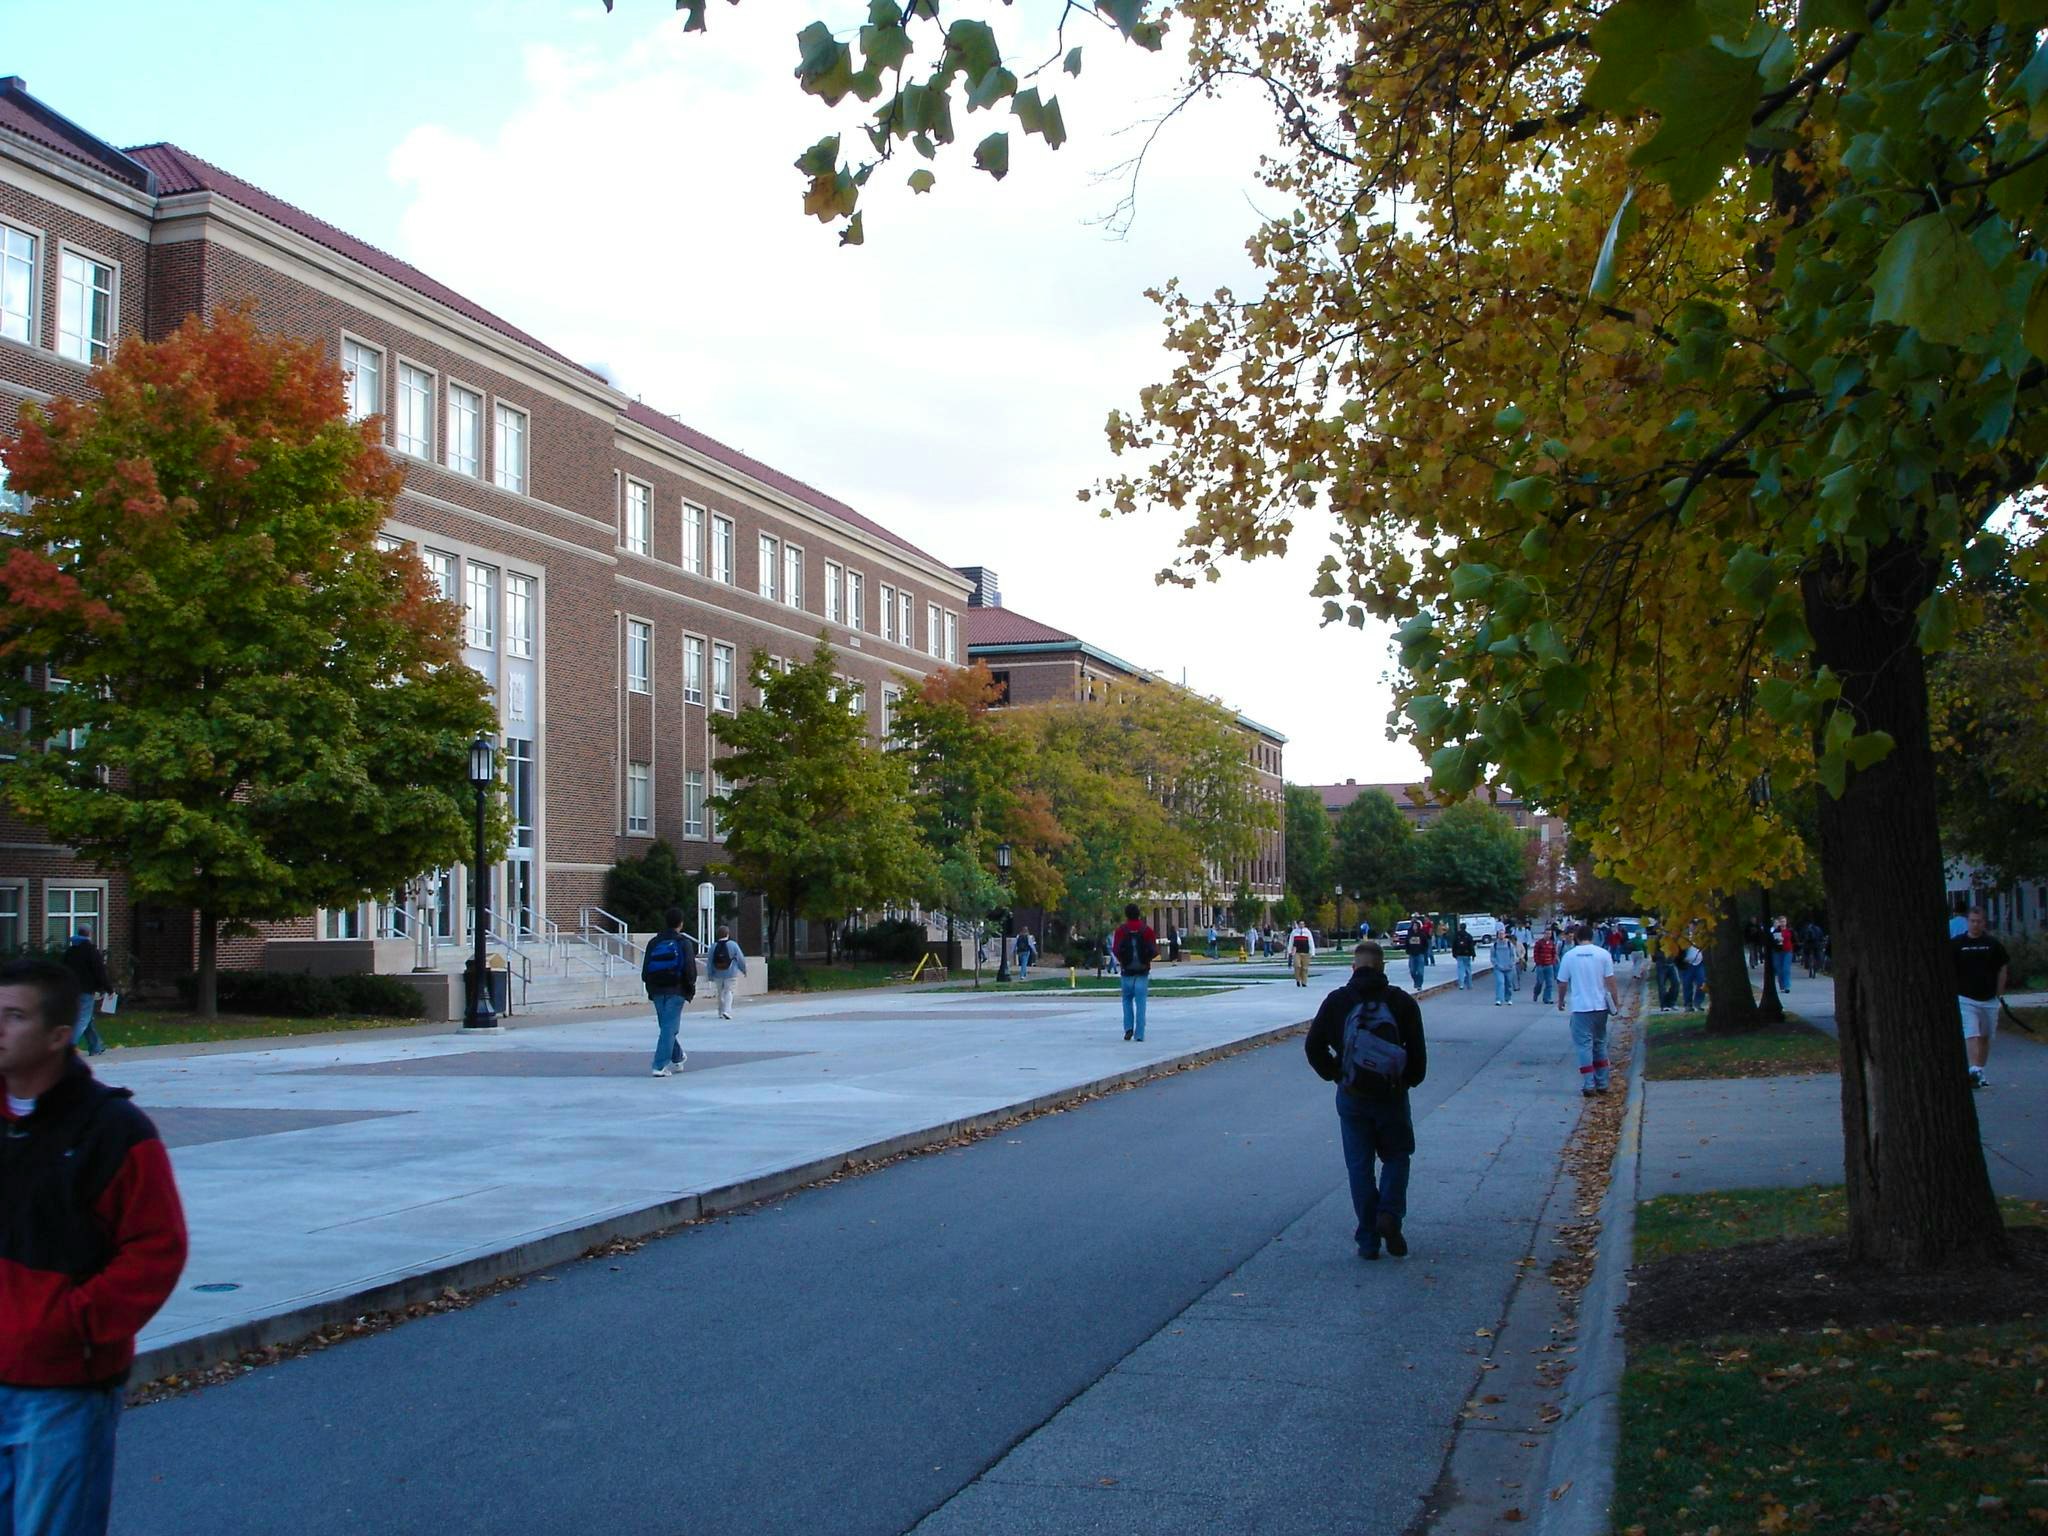 Purdue University Main Campus Admission Requirements, SAT, ACT, GPA